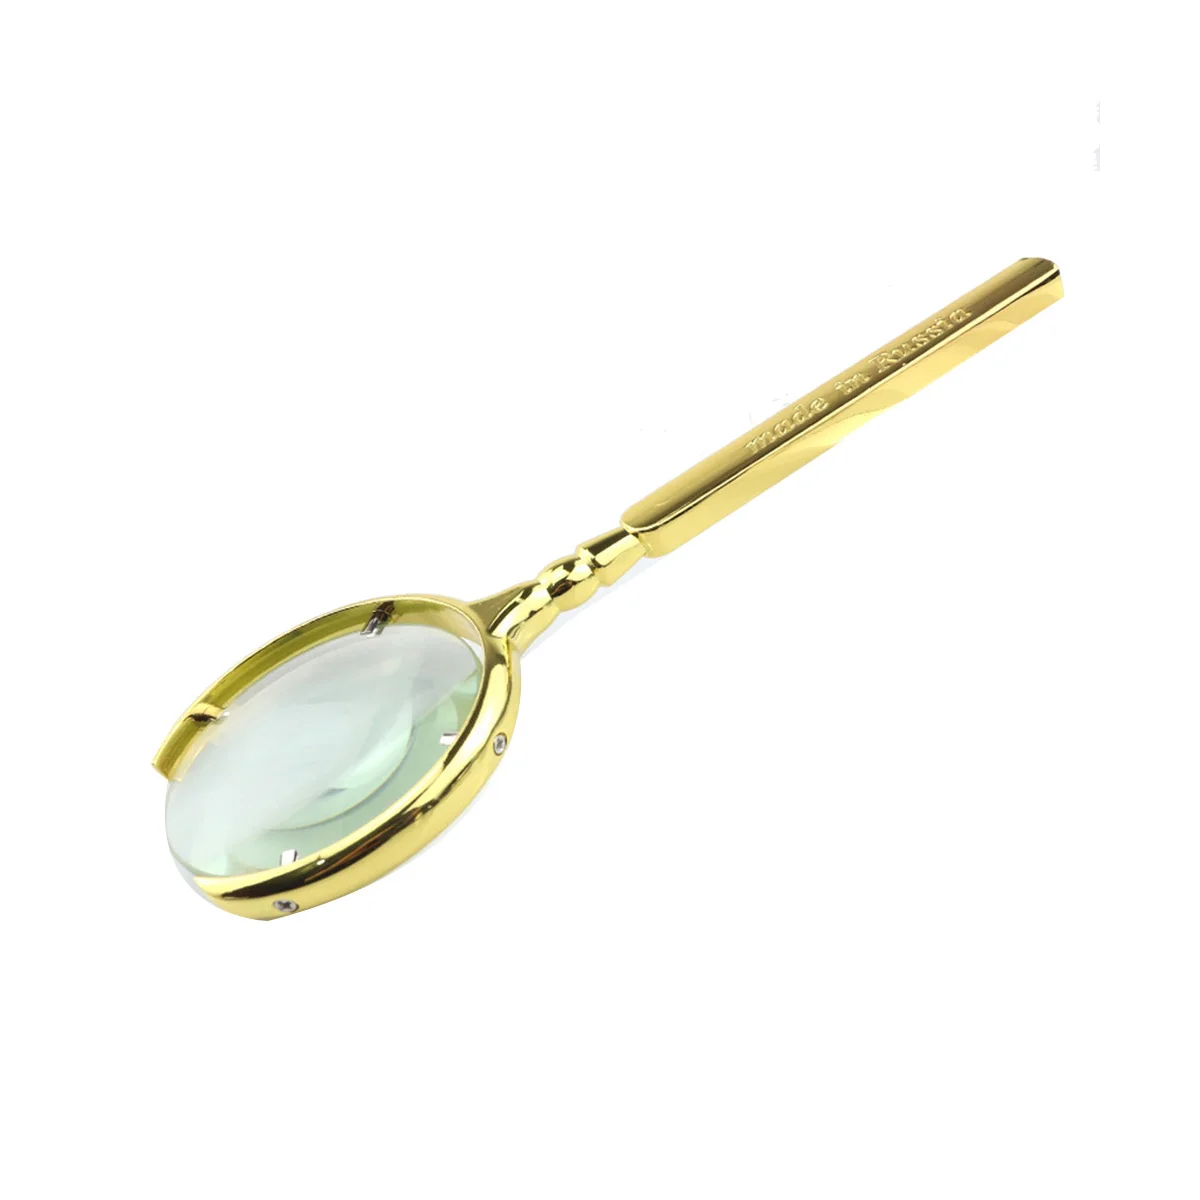 

10X Vintage Reading Magnifier Hand-Held Magnifying Glass with Optical Glass Magnifying Glass Lens Magnifie,Gold